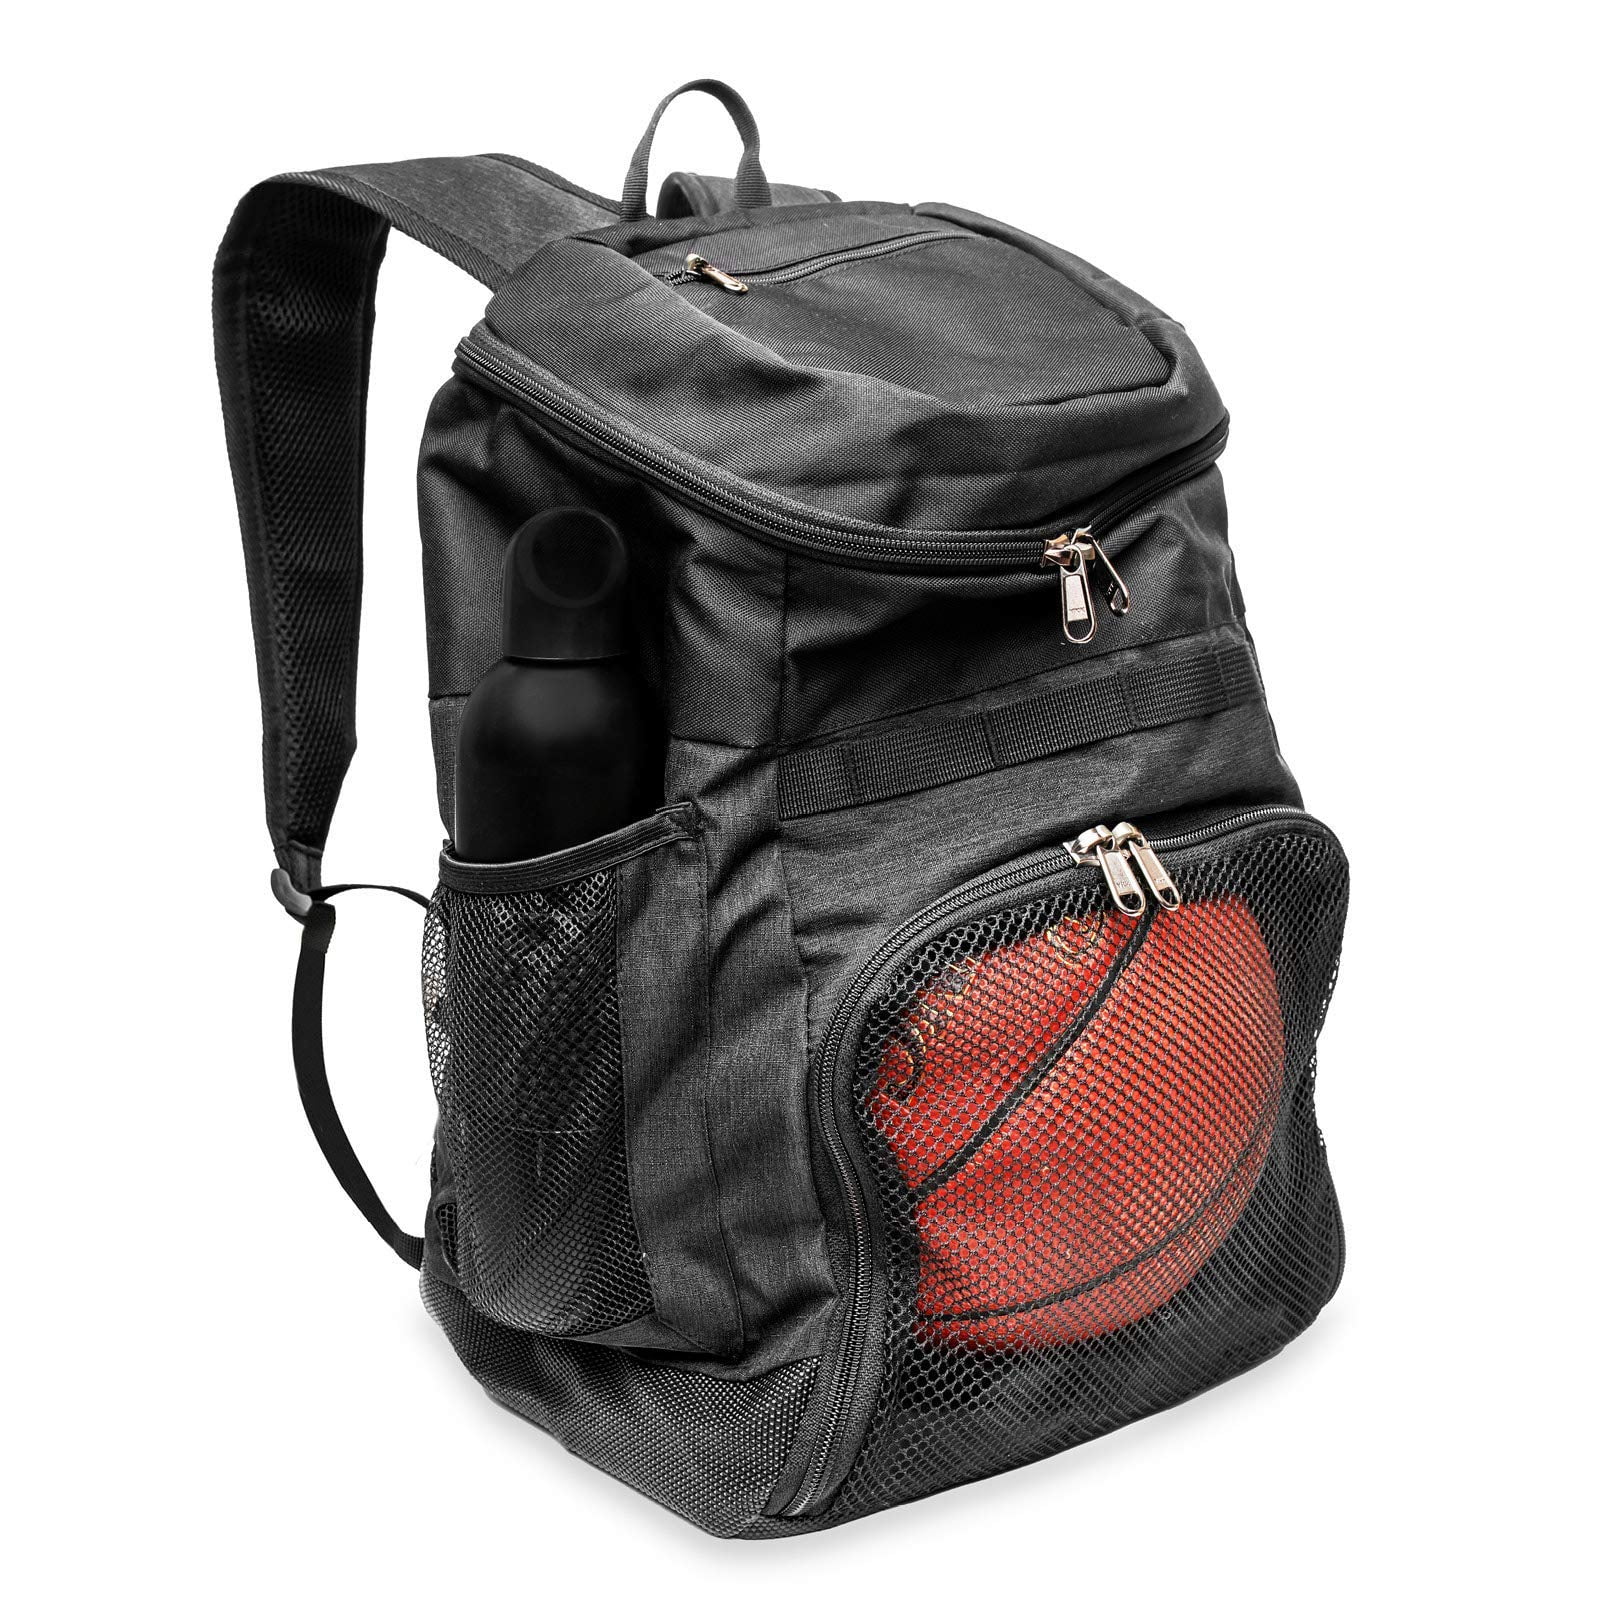 Aqua LISH Girls Large School Sports Volleyball Backpack Bag w Ball Compartment 